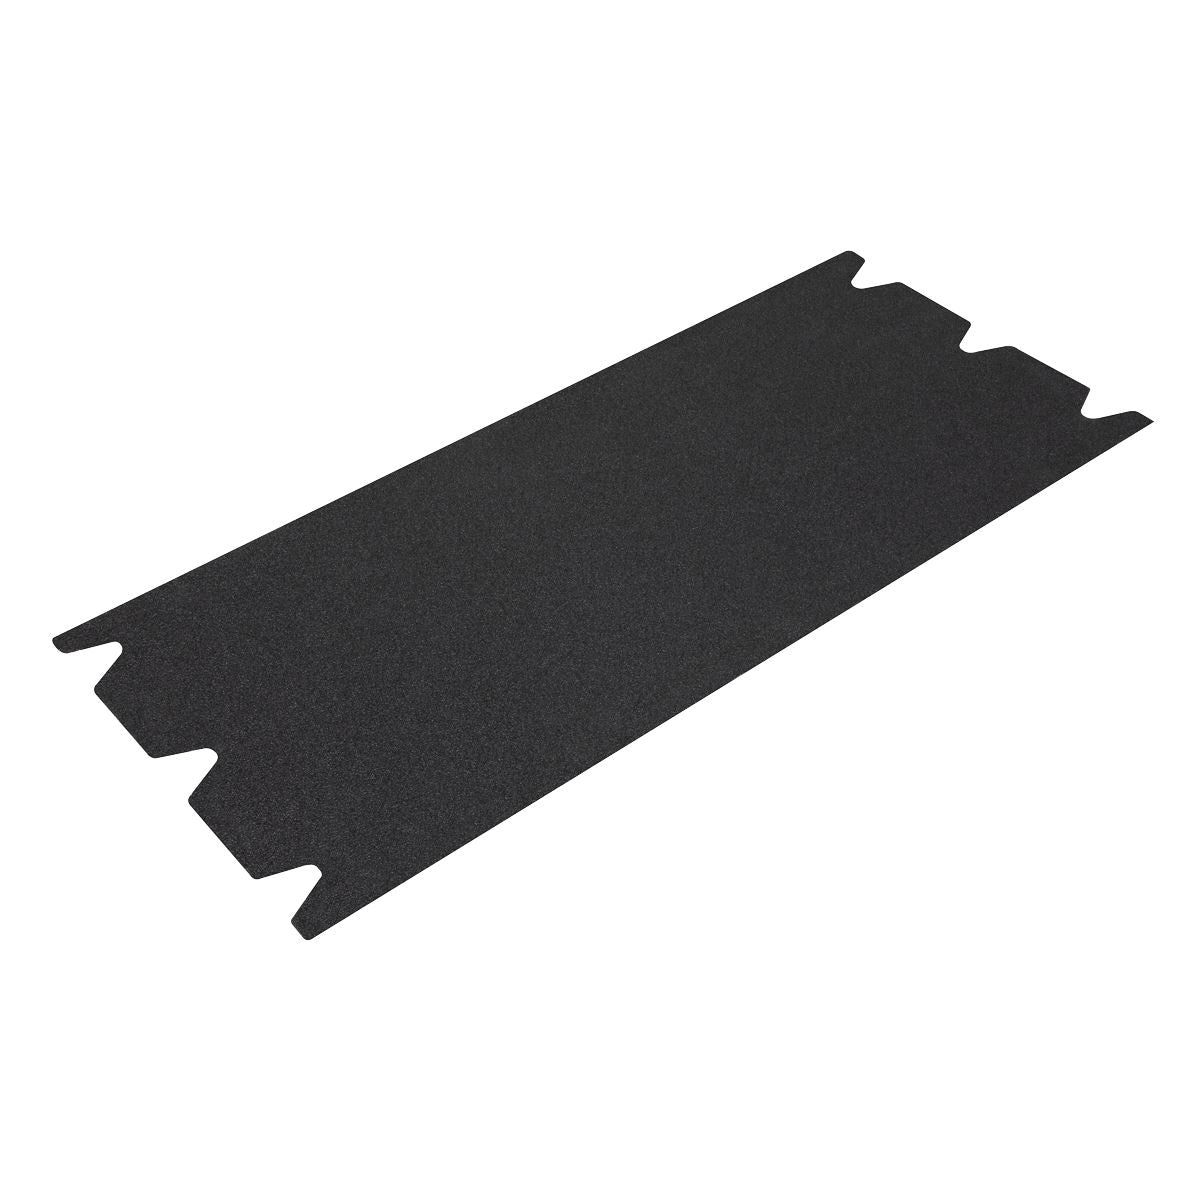 Sealey Floor Sanding Sheet 203 x 495mm 80Grit - Pack of 5